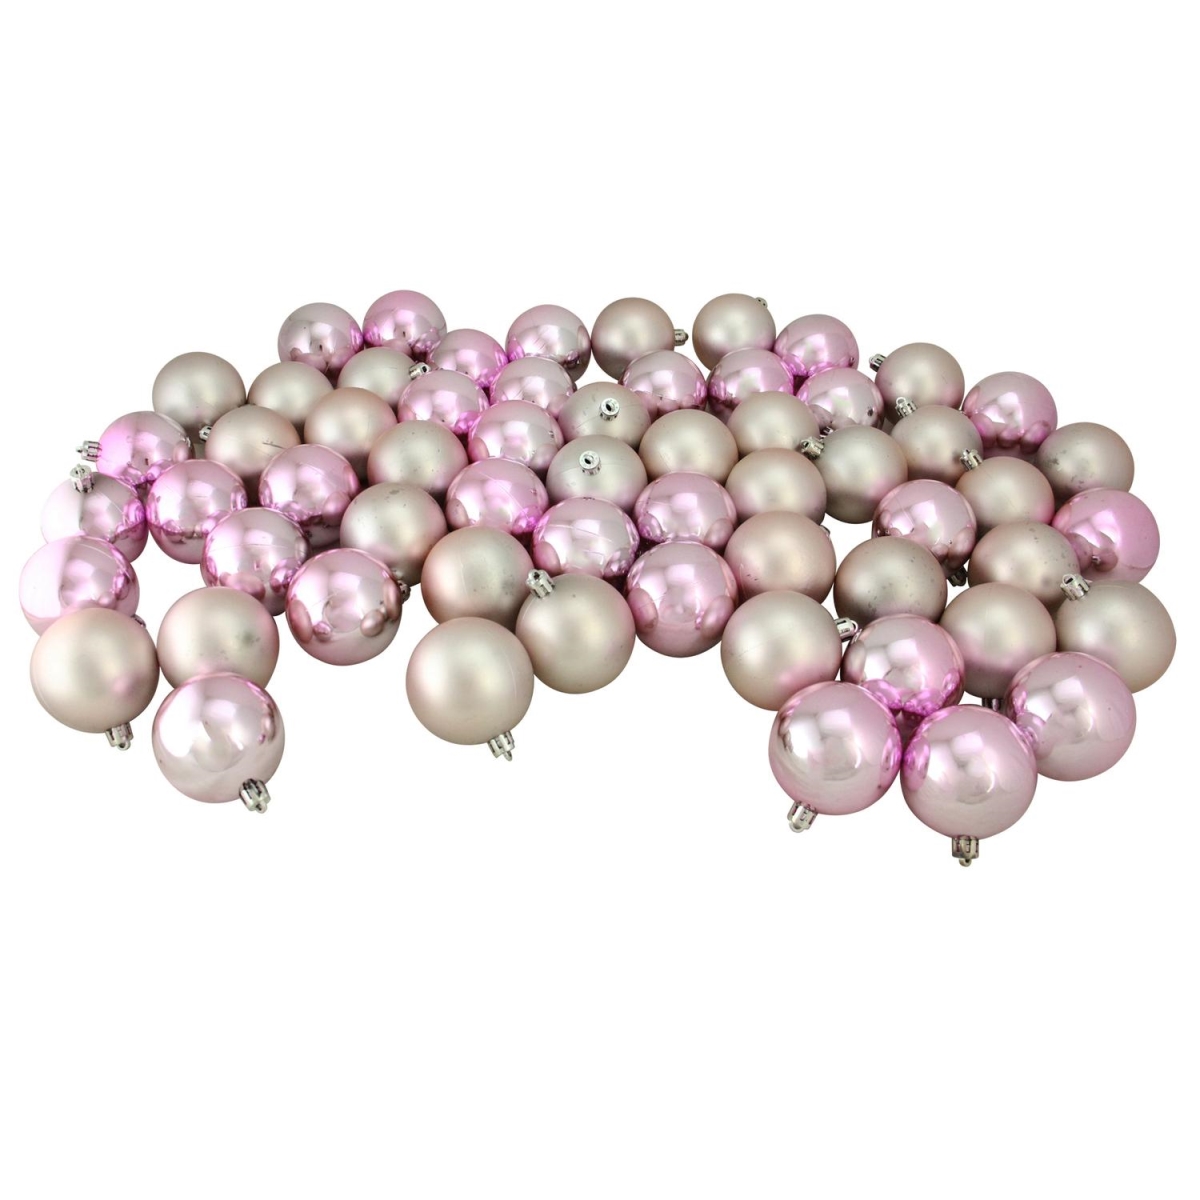 32621827 Pink Shatterproof X-mas Ball Ornaments, 60 Count